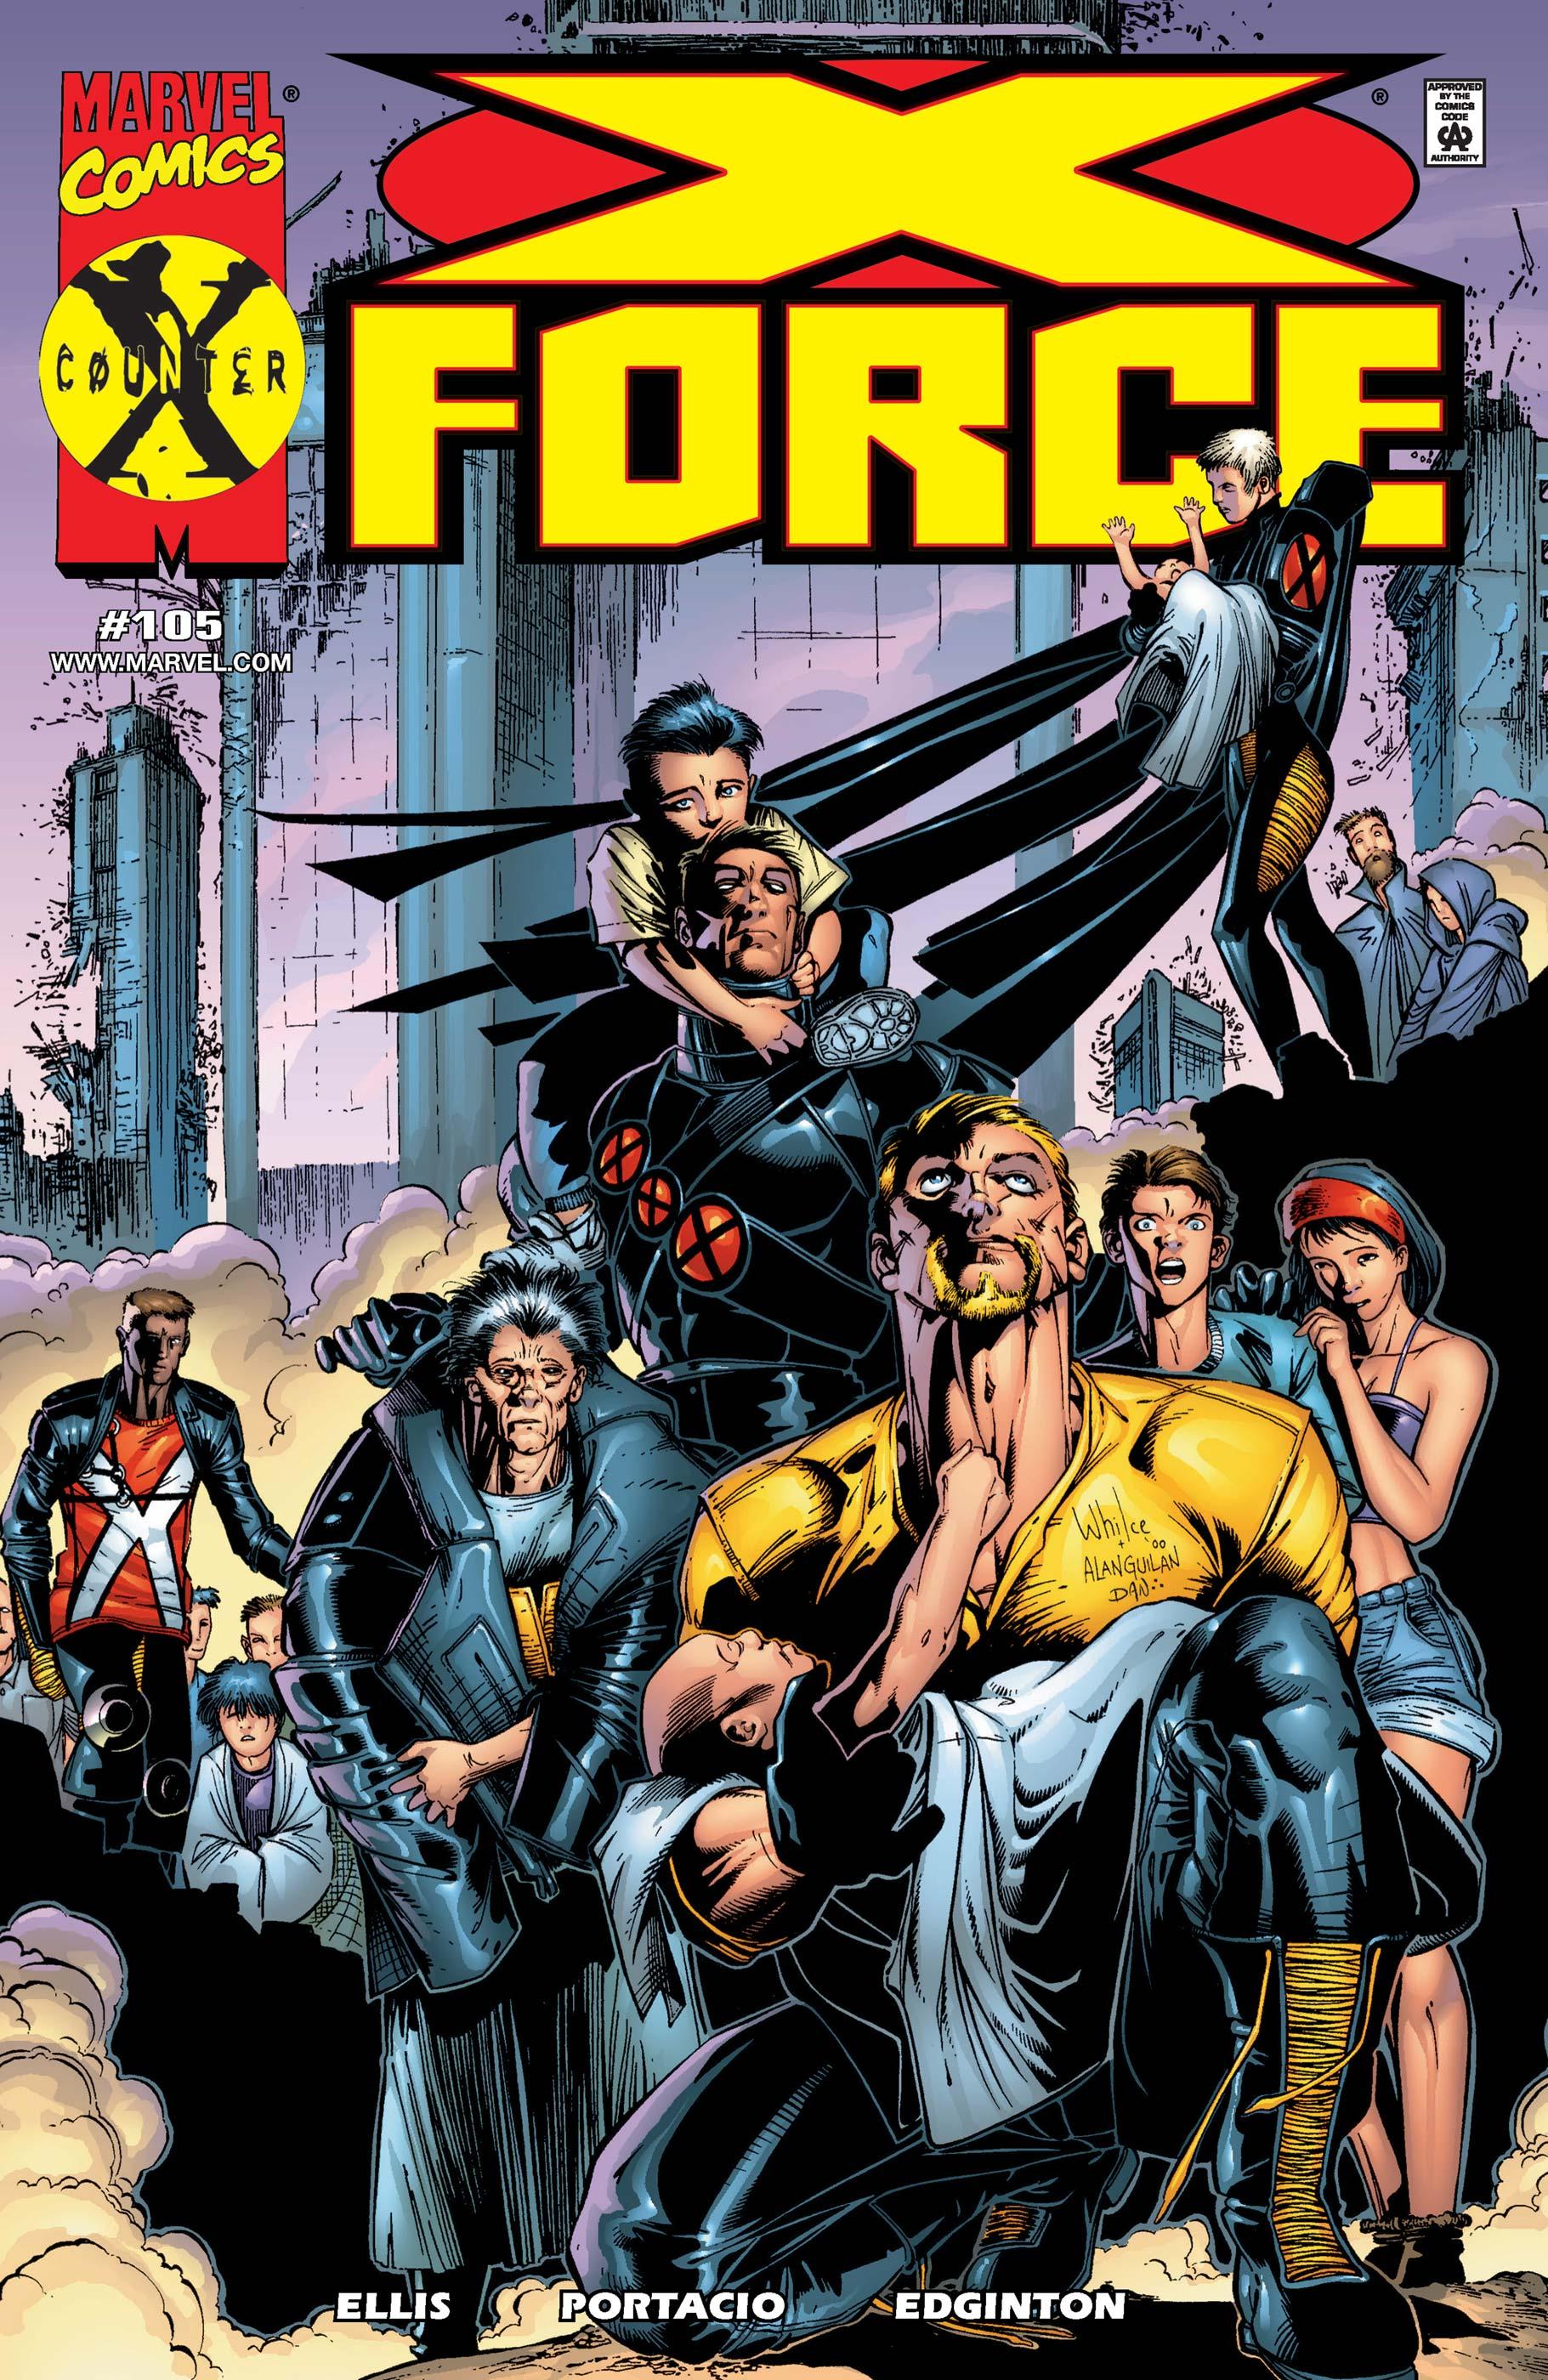 X-FORCE #101#102#103#104#105 - MARVEL COMICS (2000)